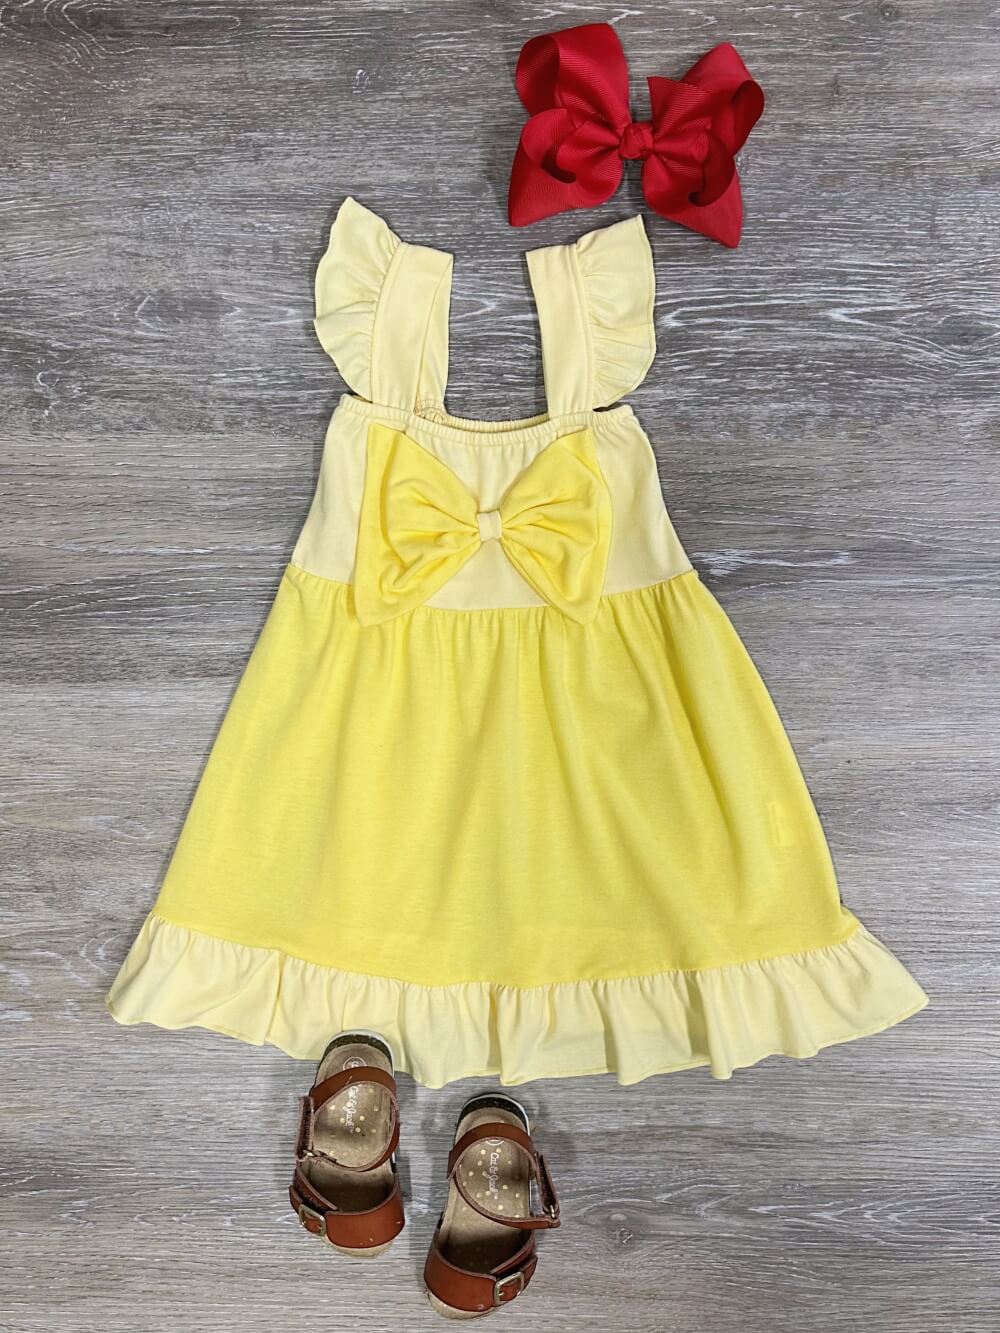 Princess Dress Up - Yellow Belle Beauty